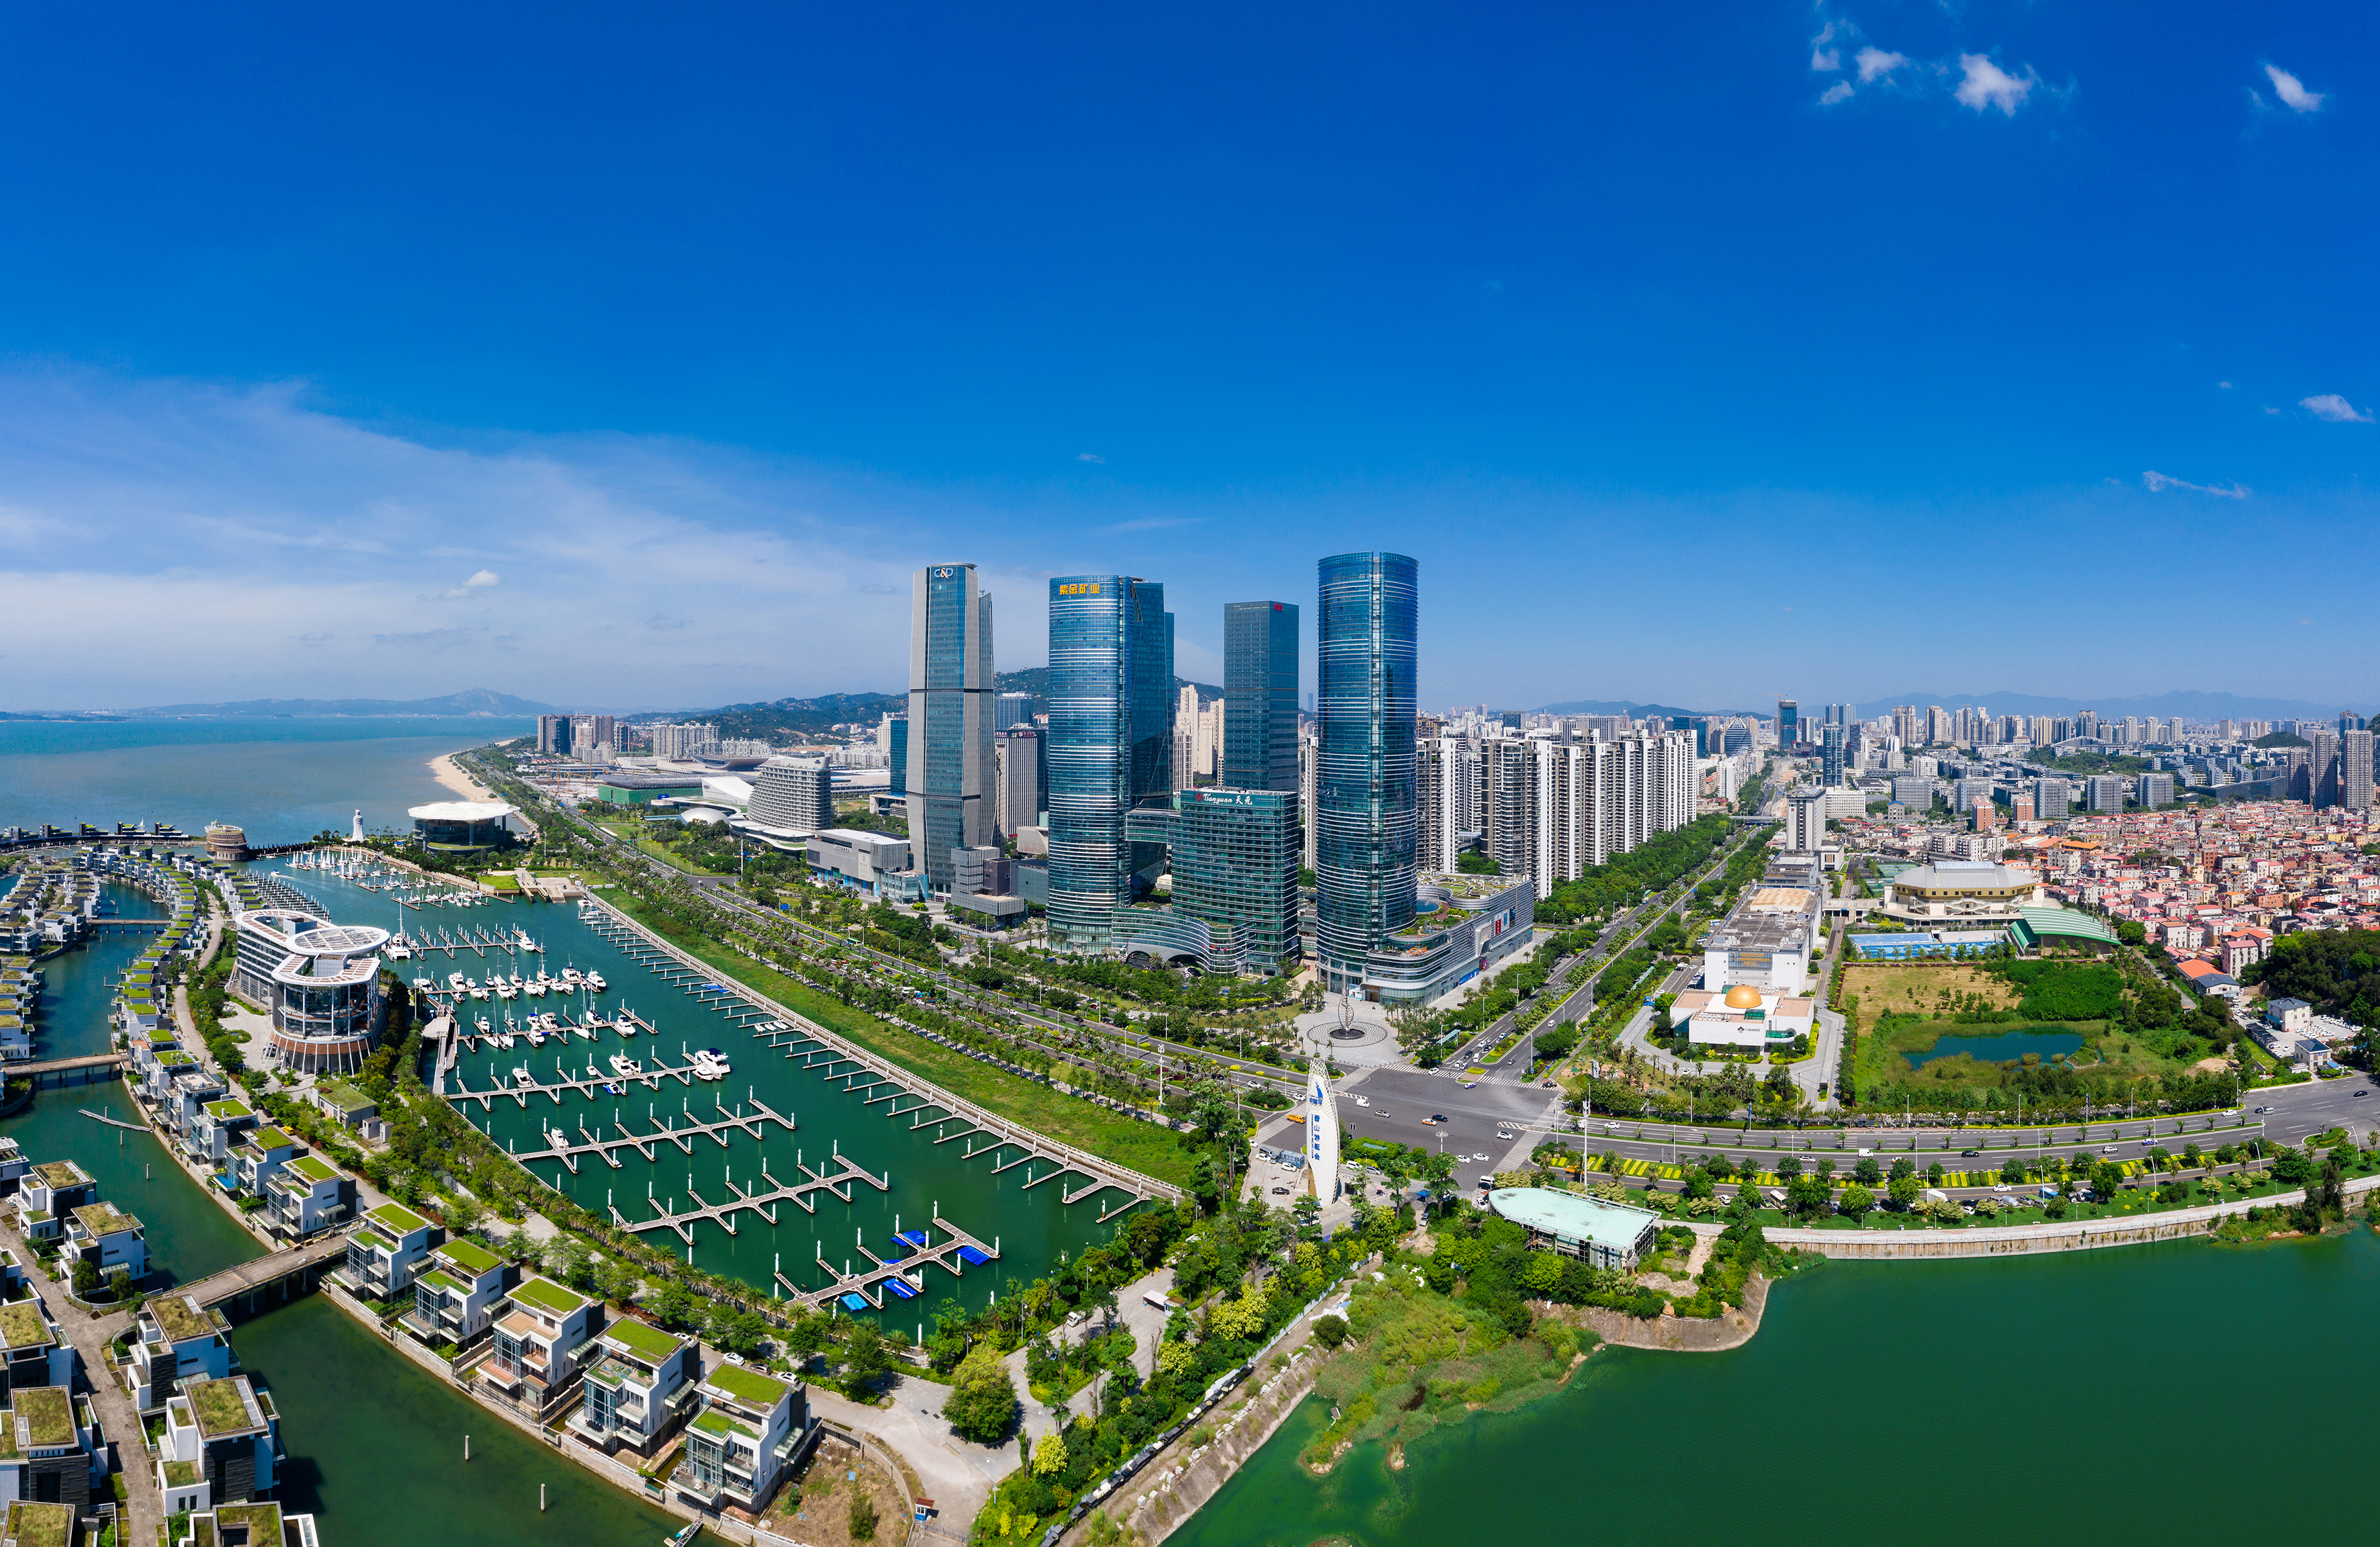 Xiamen incentivizes manufacturing enterprises to pursue intelligent manufacturing